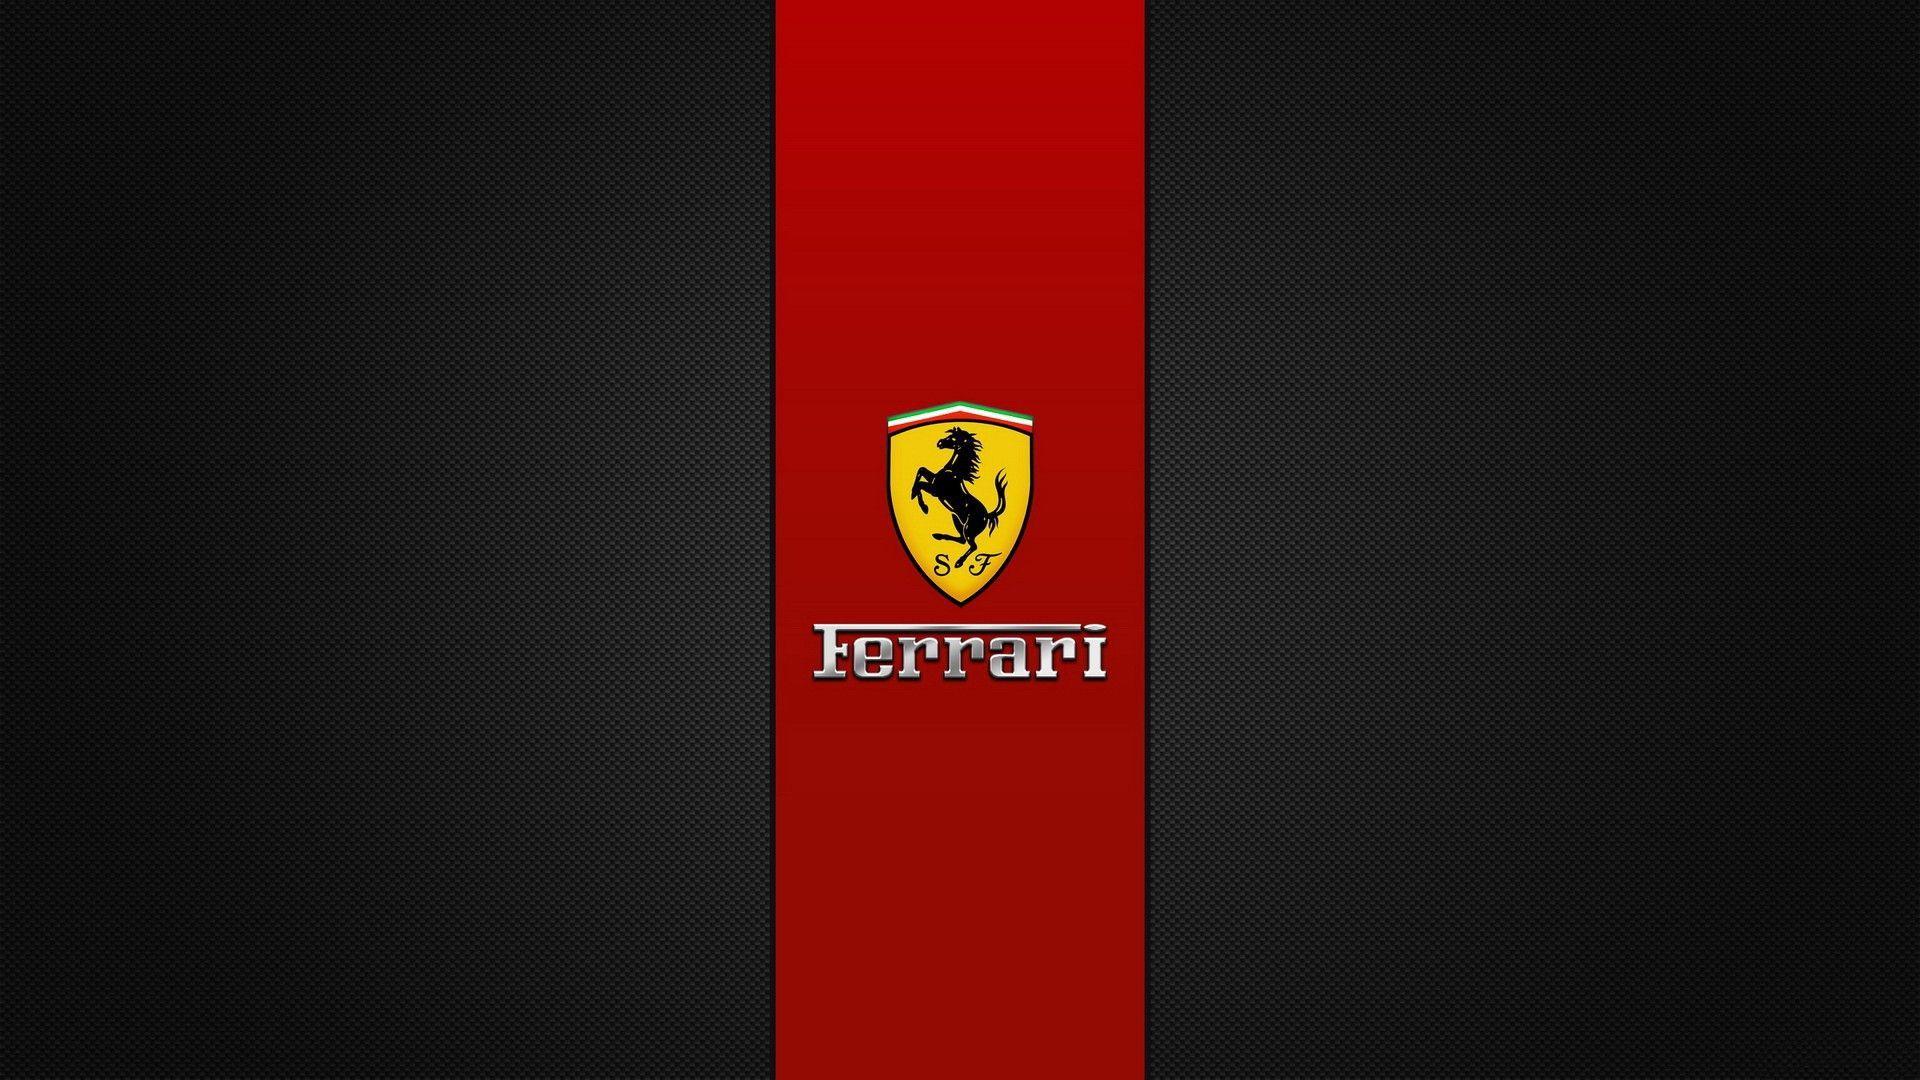 Ferrari Brand Logo Wallpaper Download Ferrari Wallpaper